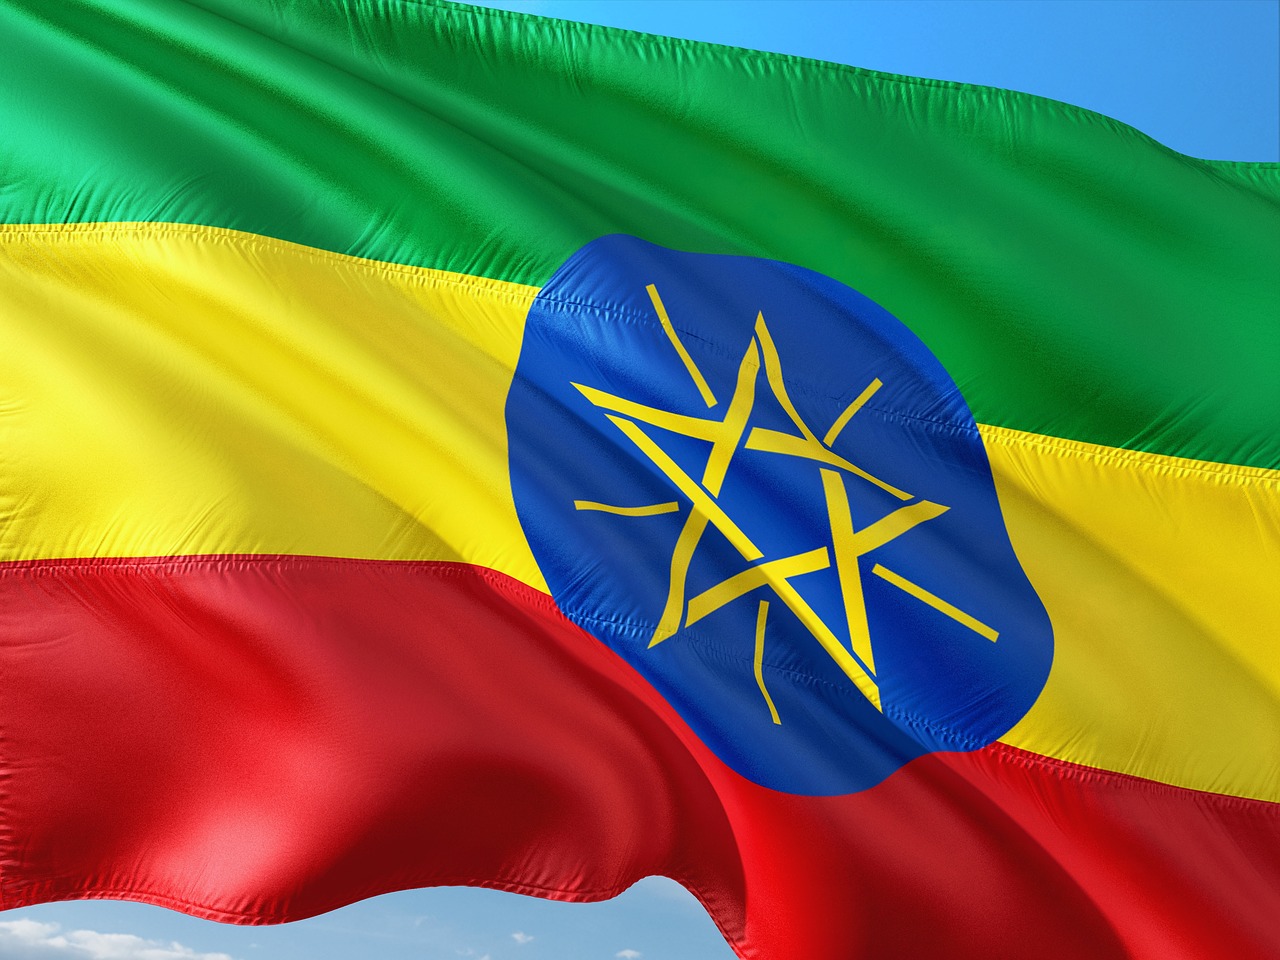 UN officials urge halt to gender-based violence in Tigray region of Ethiopia